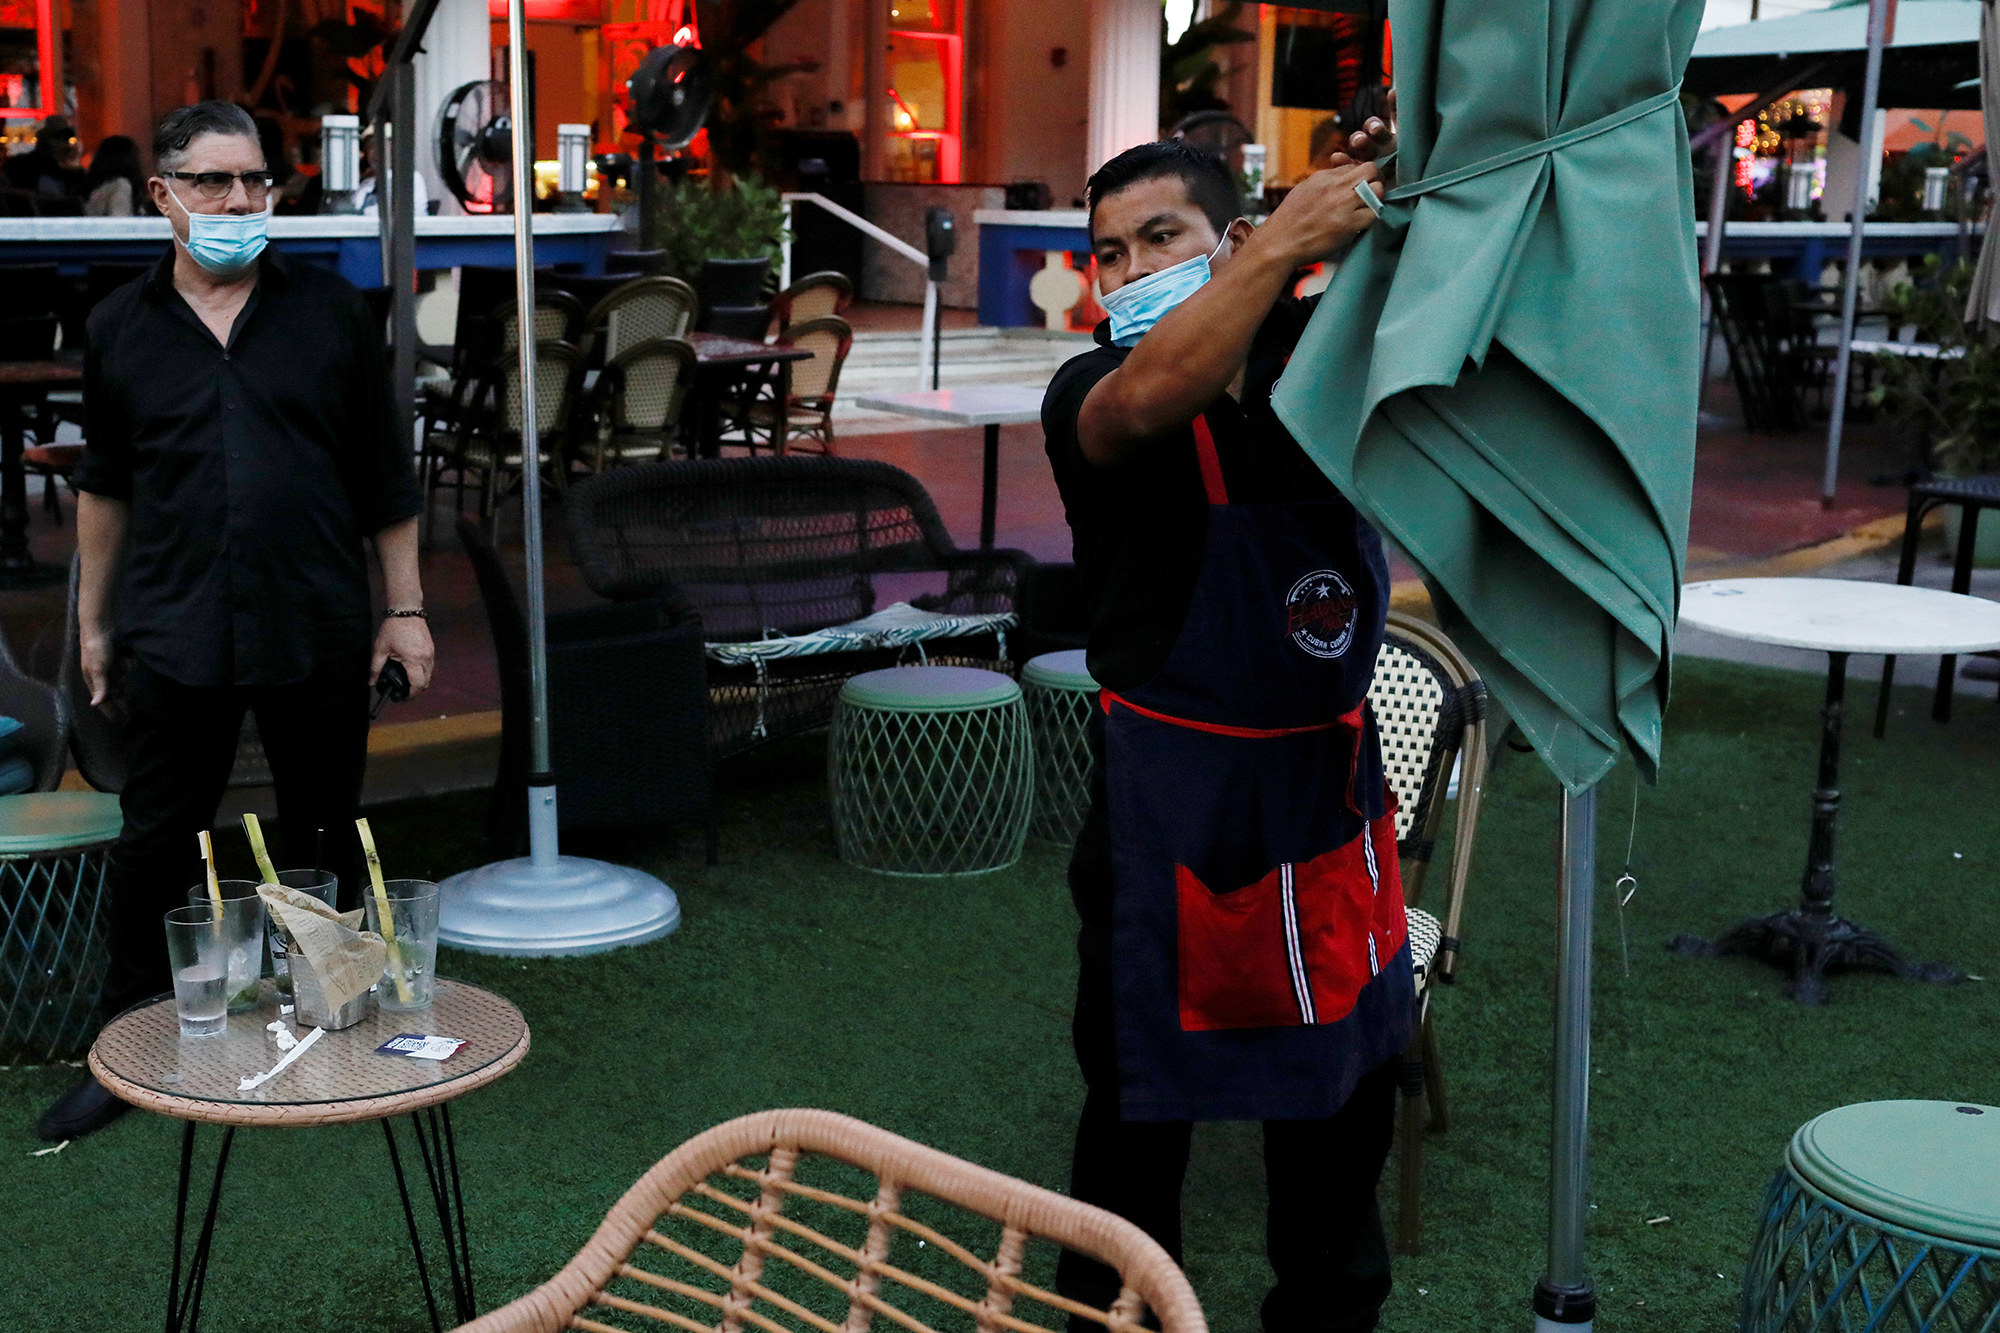 A man wearing a mask packs up an umbrella at an outdoor dining setup 